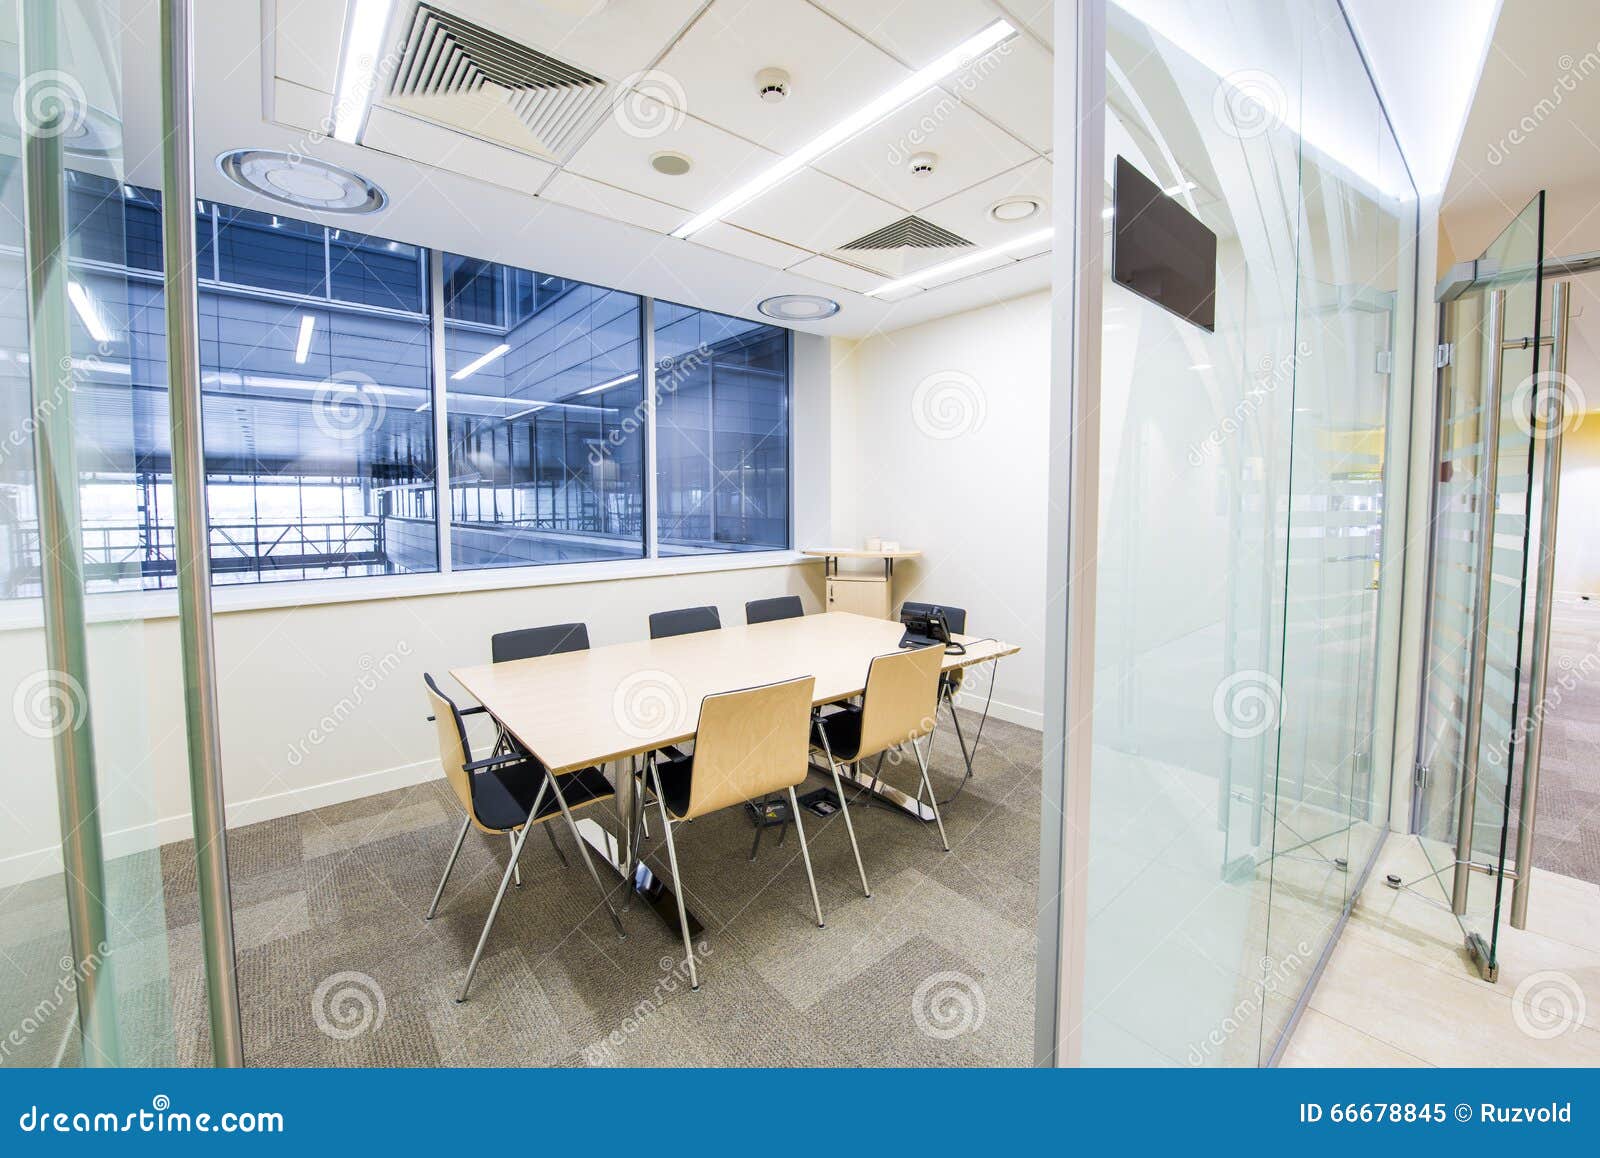 Empty Small Meeting Room Bright Modern Interior Stock Image